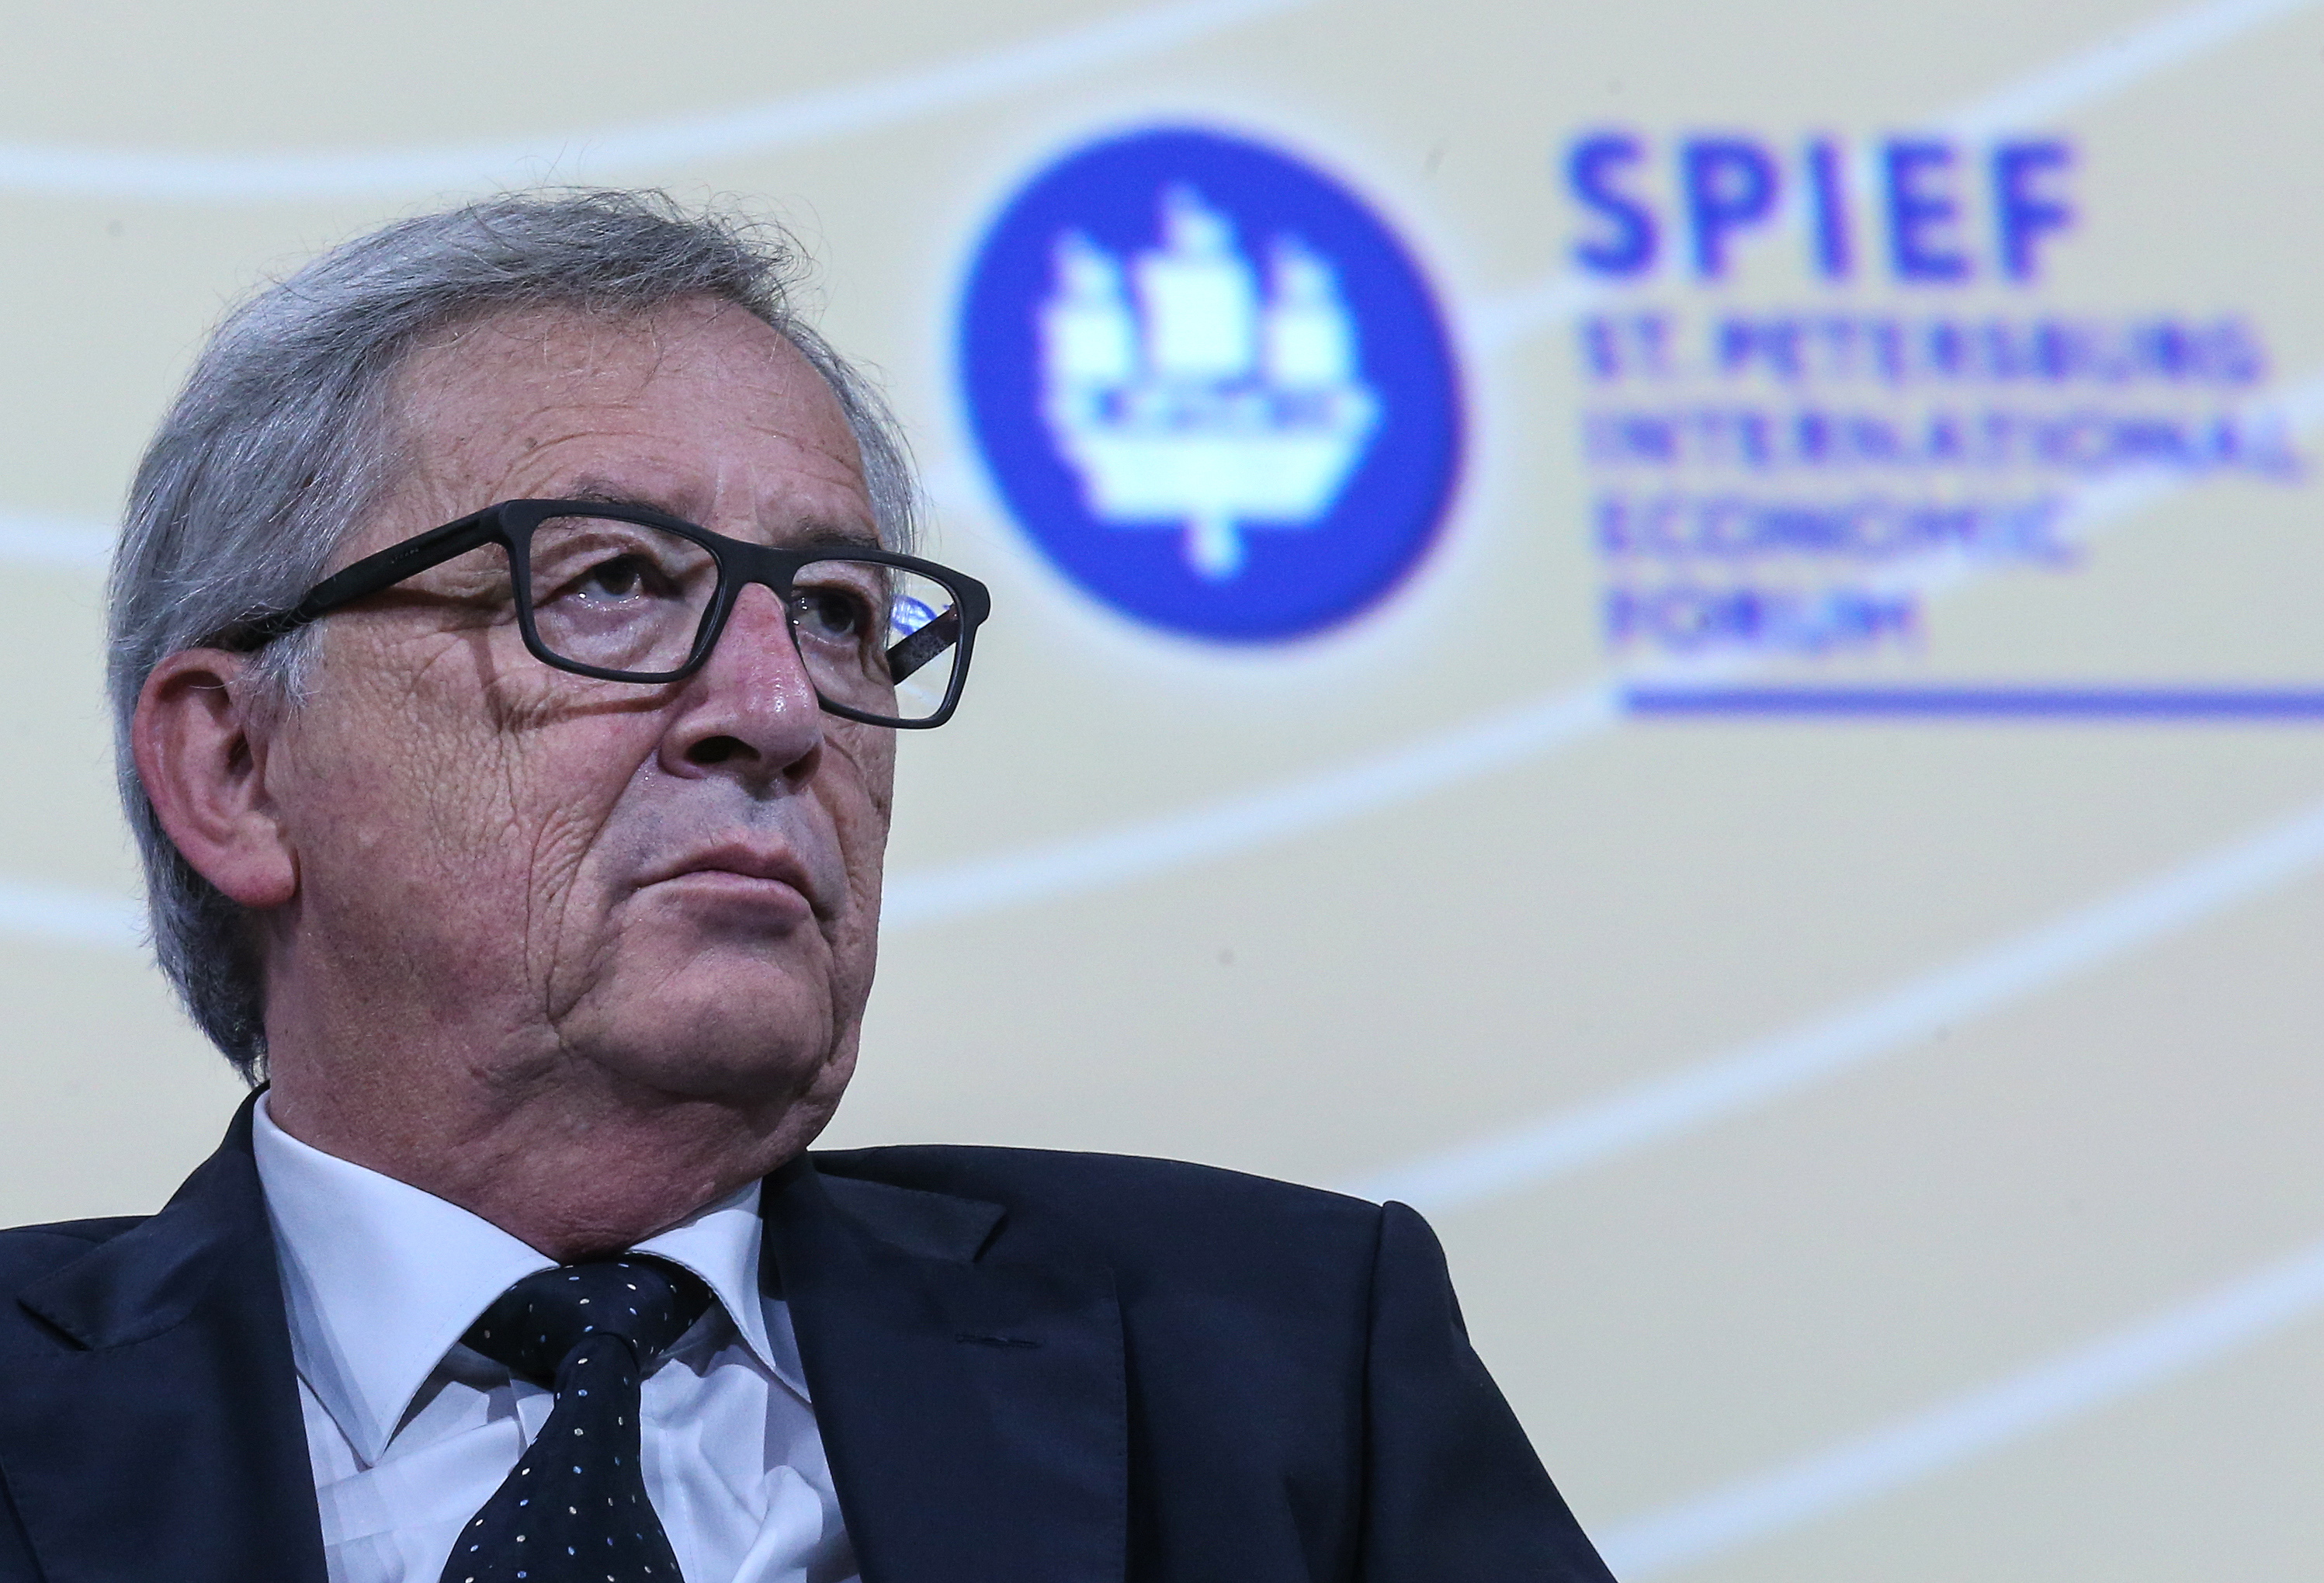 The European Commission head Jean-Claude Juncker at the St. Petersburg Economic Forum.